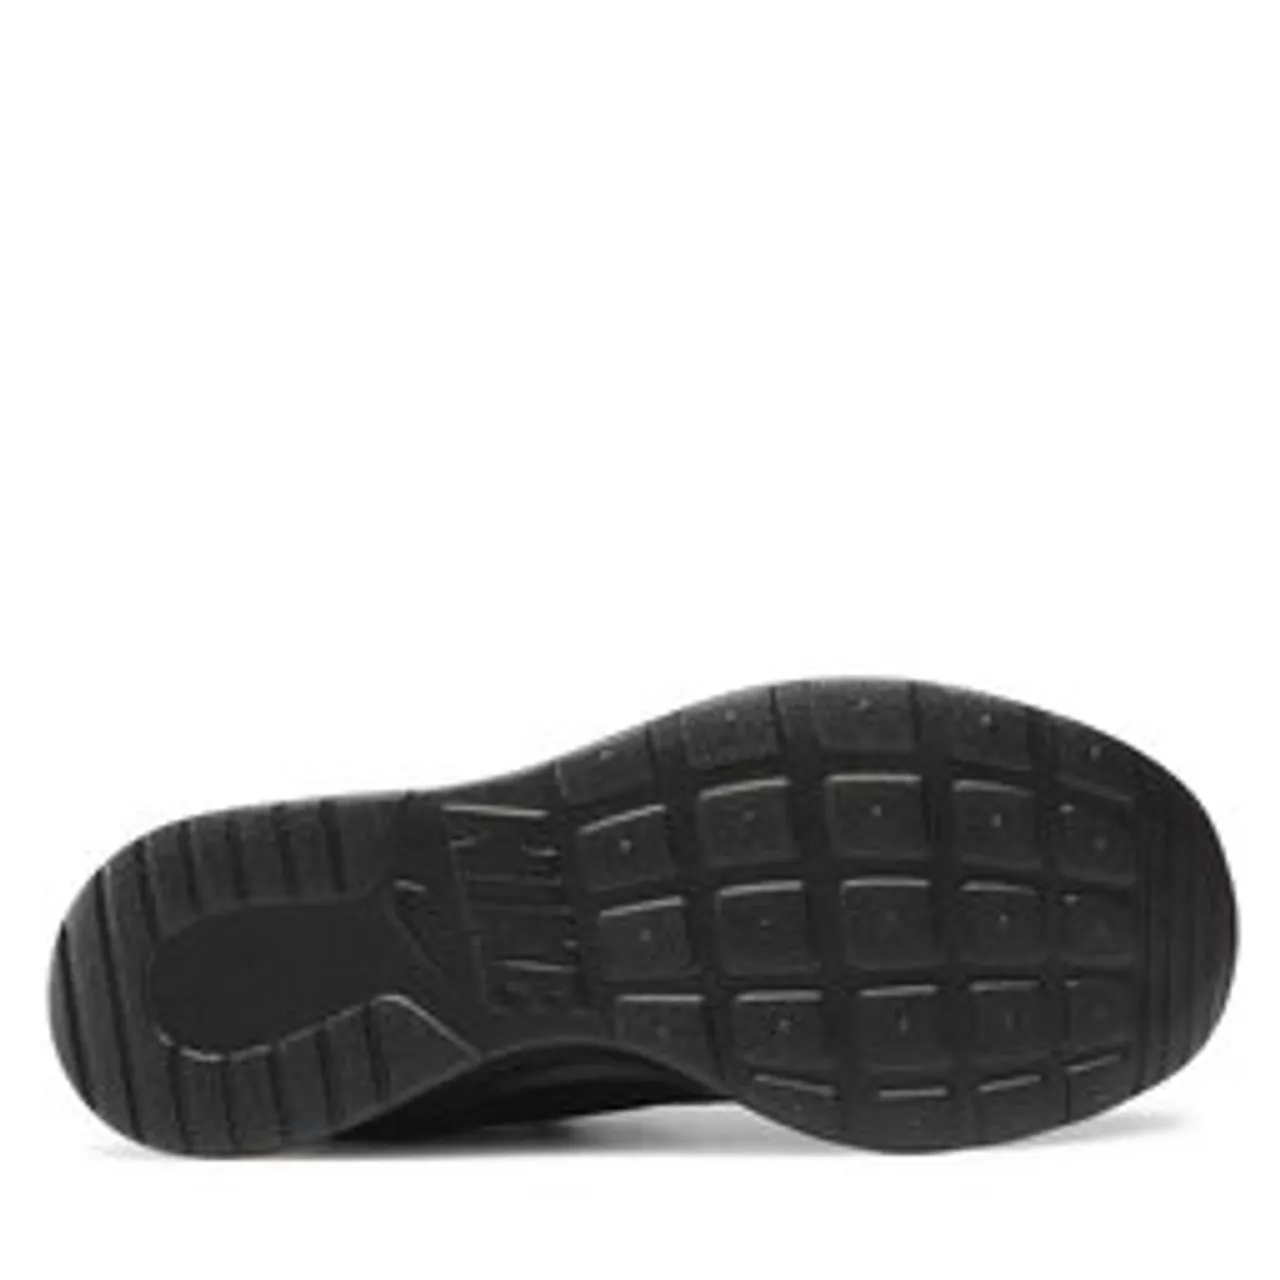 Sneakers Nike Tanjun DJ6257 002 Schwarz